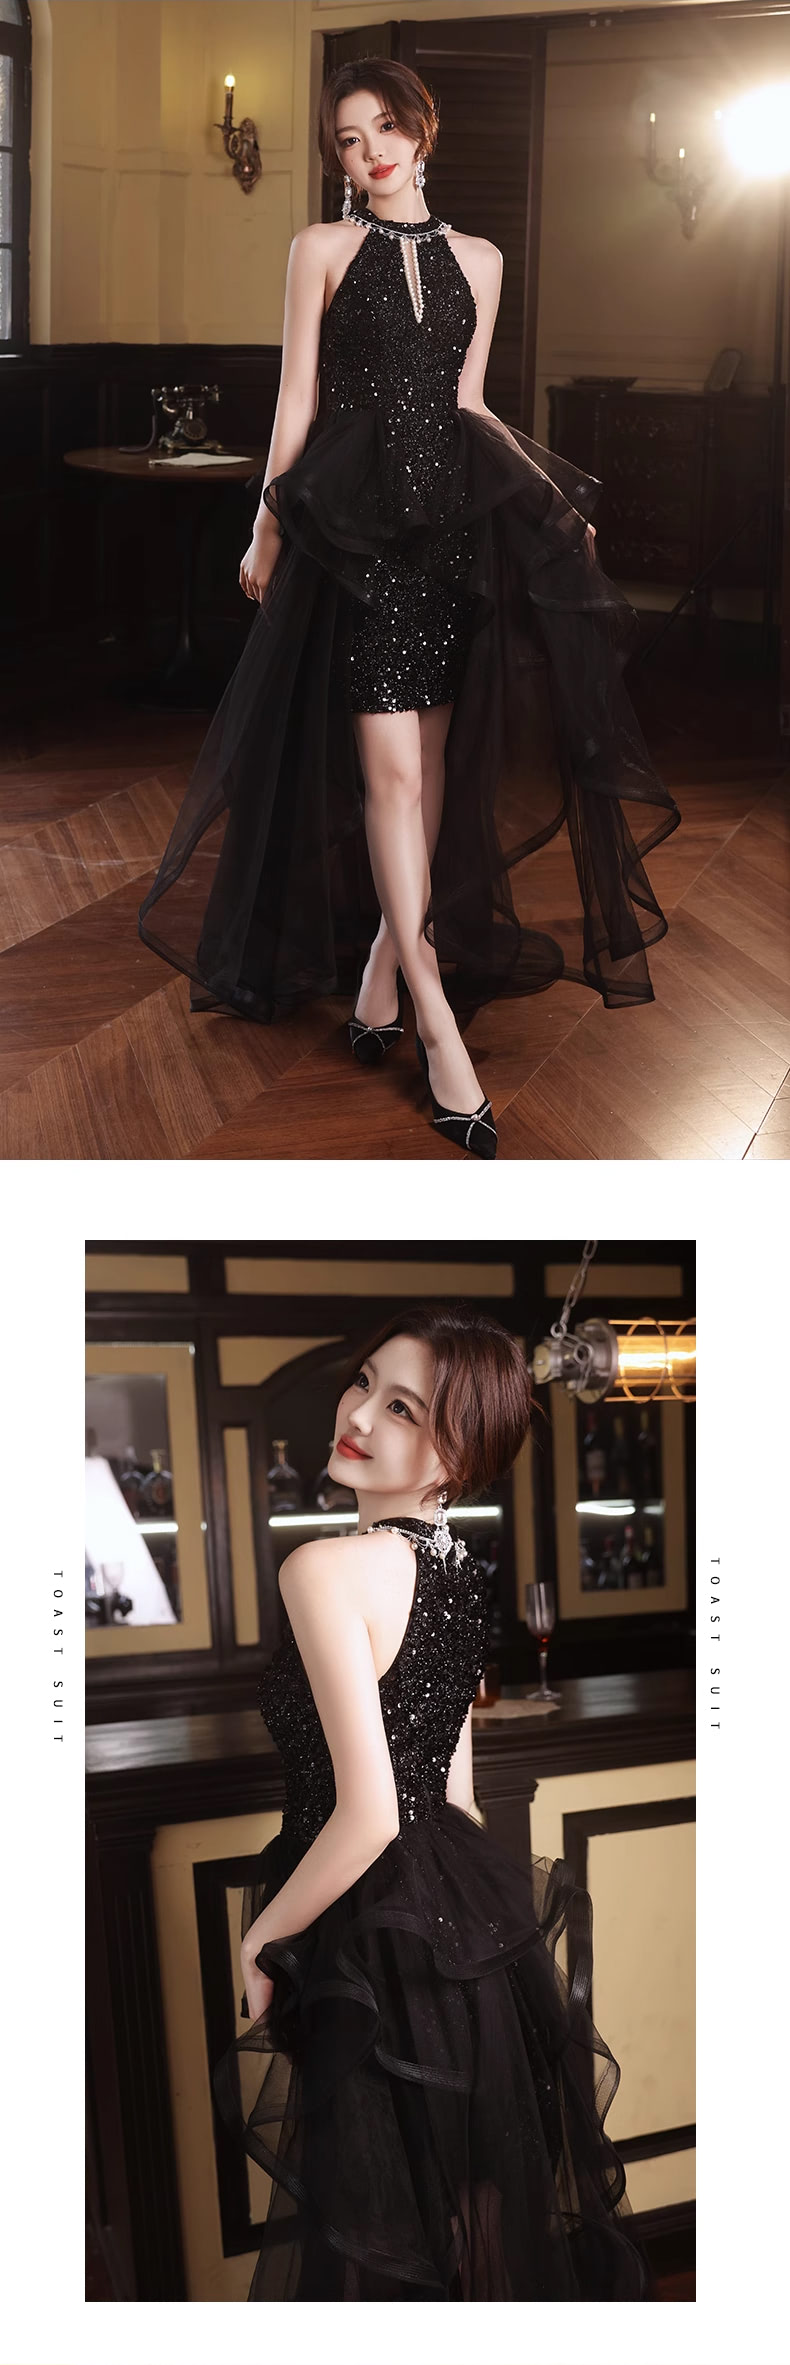 Elegant-Black-Sparkly-High-Low-Tulle-Skirt-Halter-Cocktail-Party-Prom-Dress14